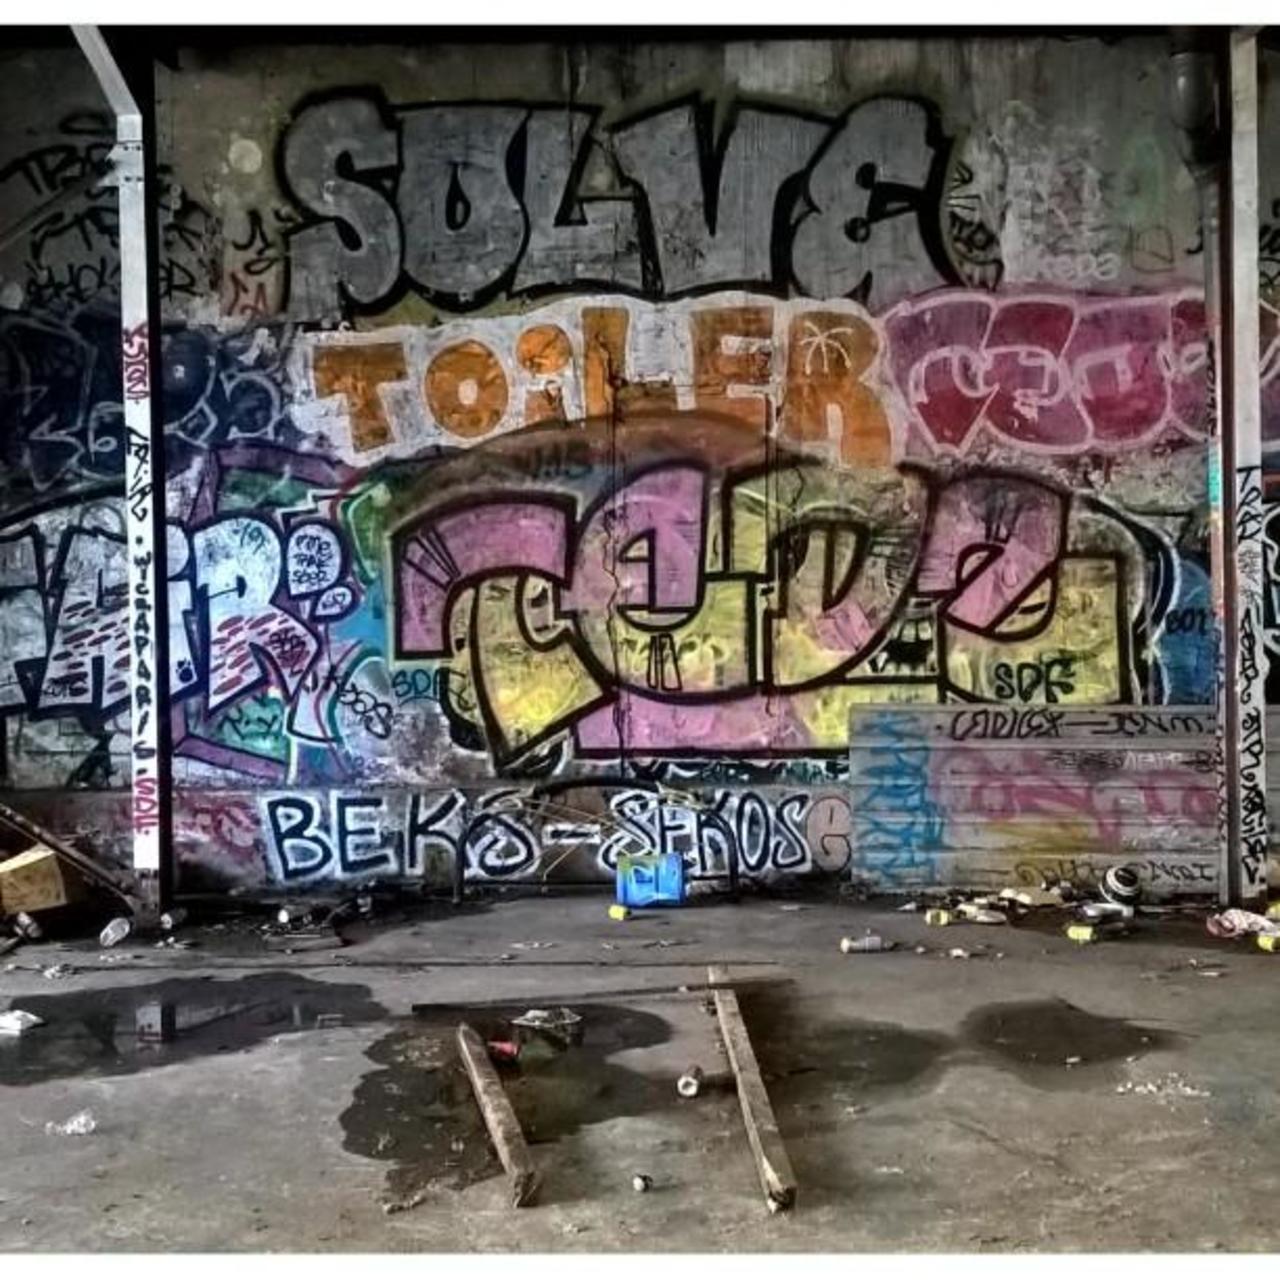 RT @StArtEverywhere: #streetart #graffiti #graff #art #fatcap #bombing #sprayart #spraycanart #wallart #handstyle #lettering #urbanart #… http://t.co/IrA6FIFcfu